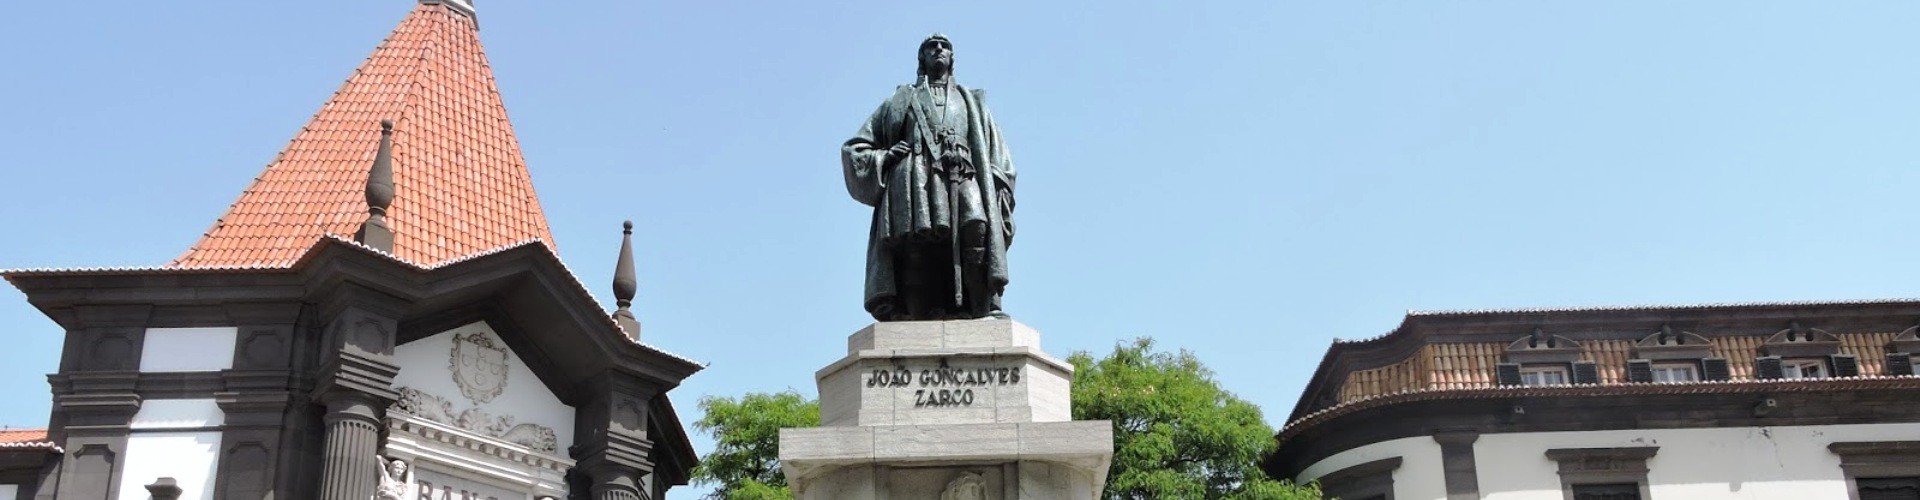 Estatua Joao Goncalve Zarco Statue, Funchal, Madeira